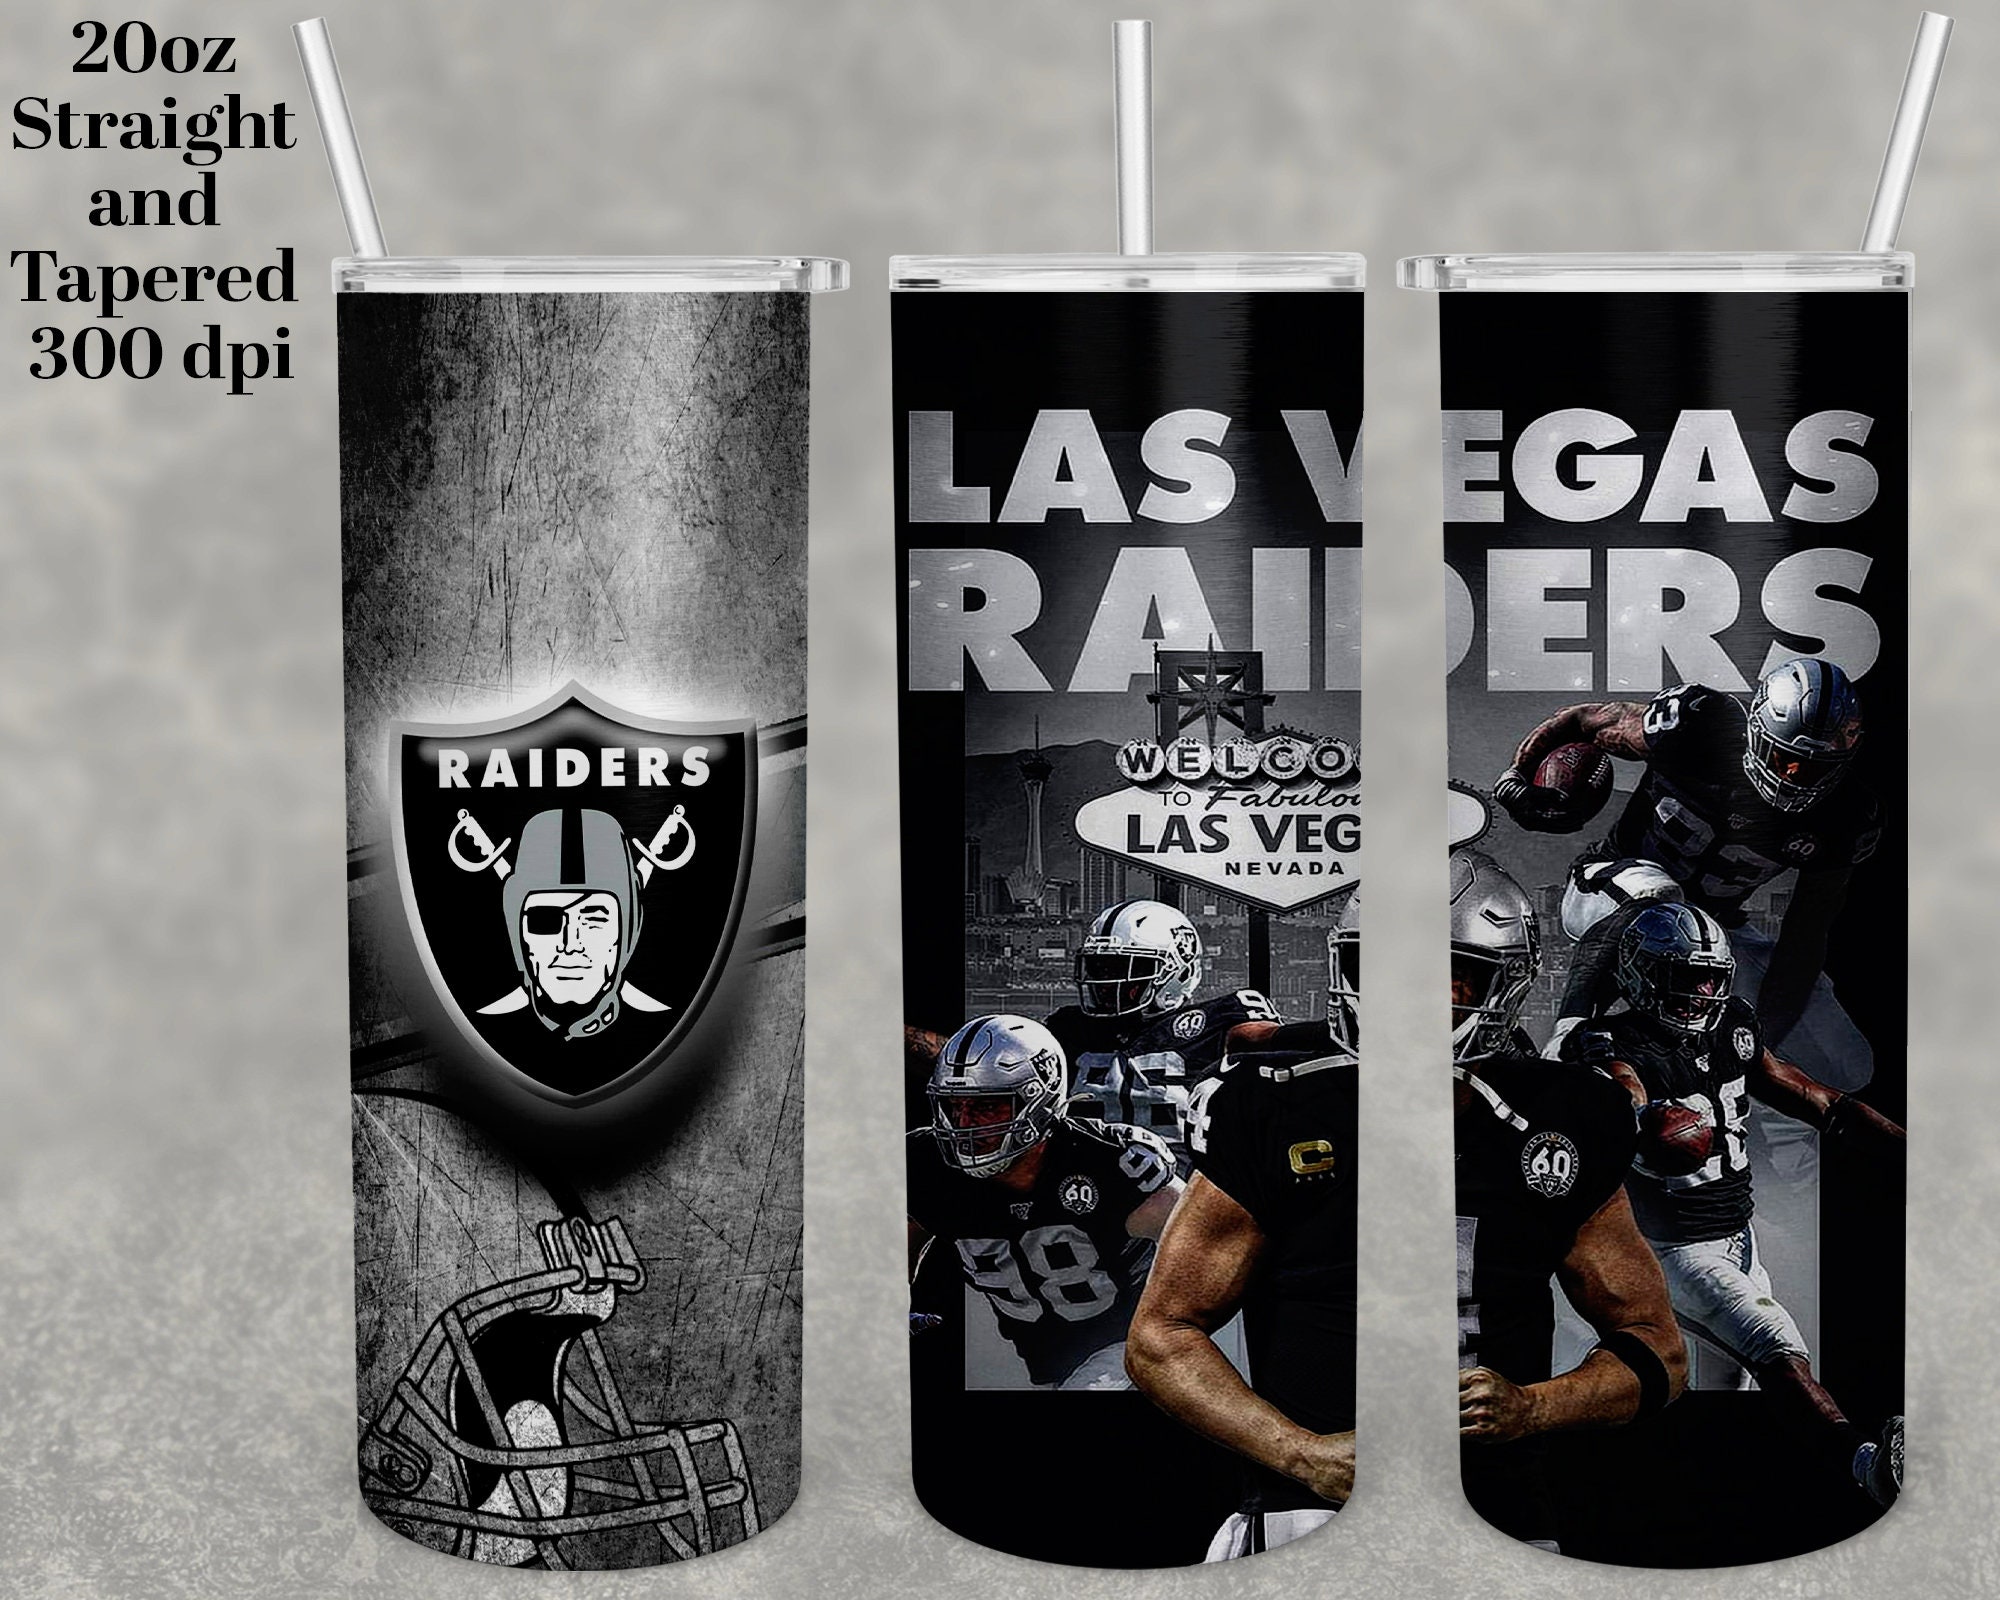 Las Vegas Raiders 20oz Mascot Stainless Steel Tumbler